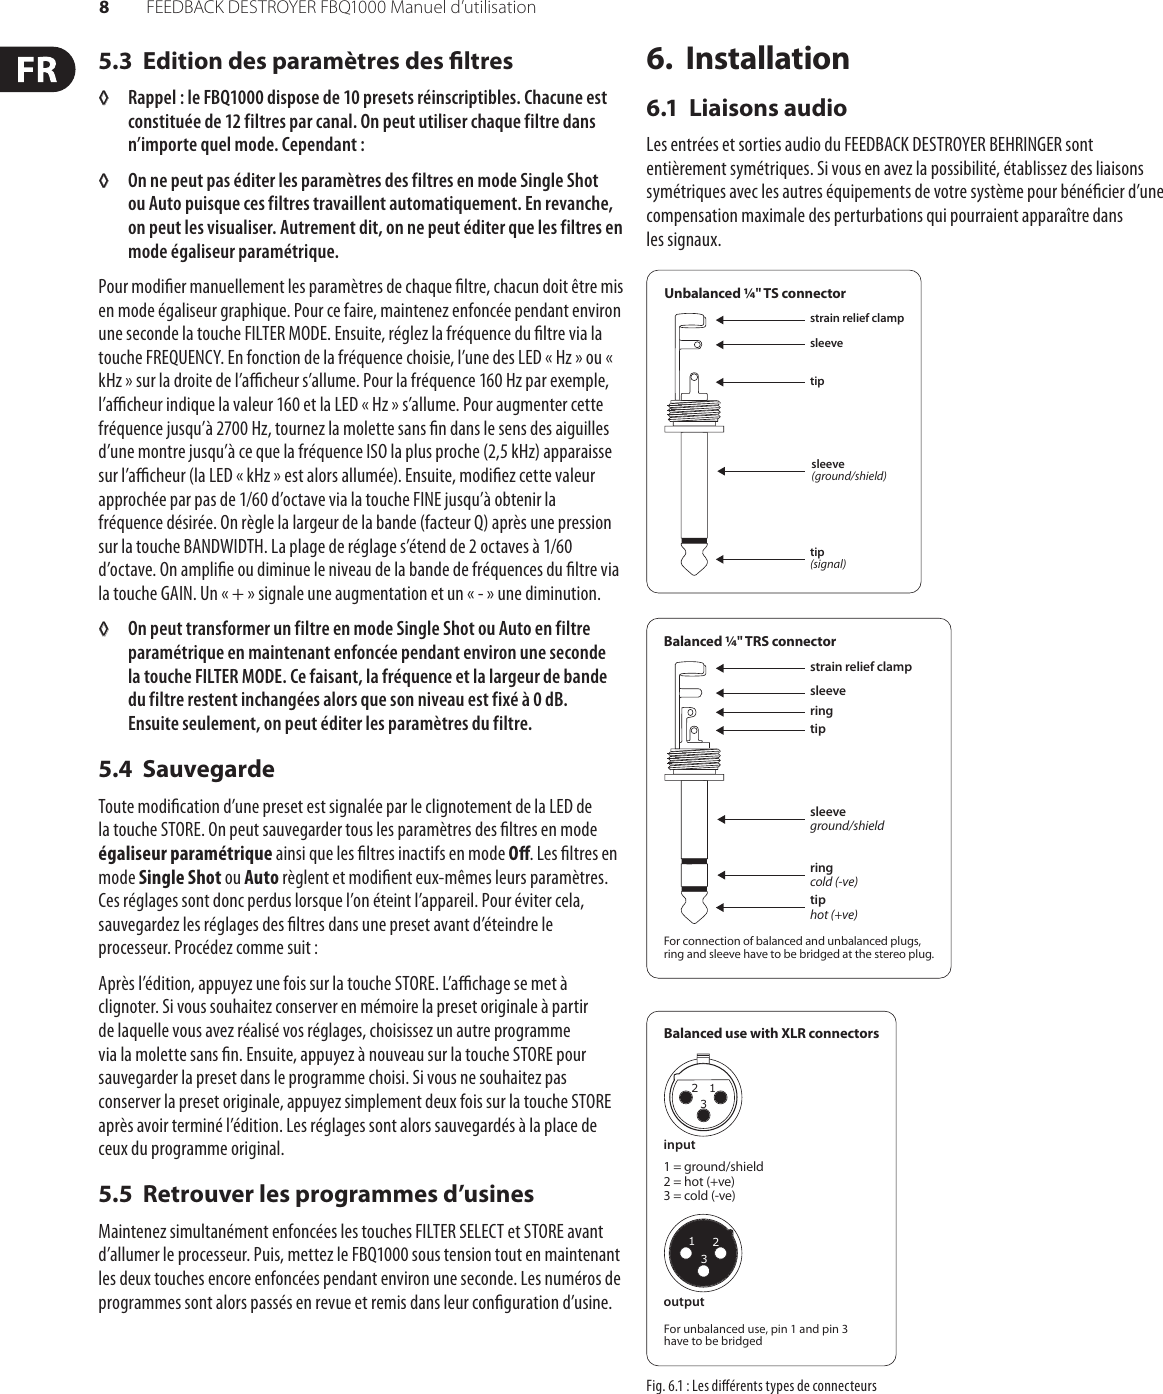 Page 8 of 12 - FEEDBACK DESTROYER FBQ1000 Behringer User Manual (French) P0A3R M FR